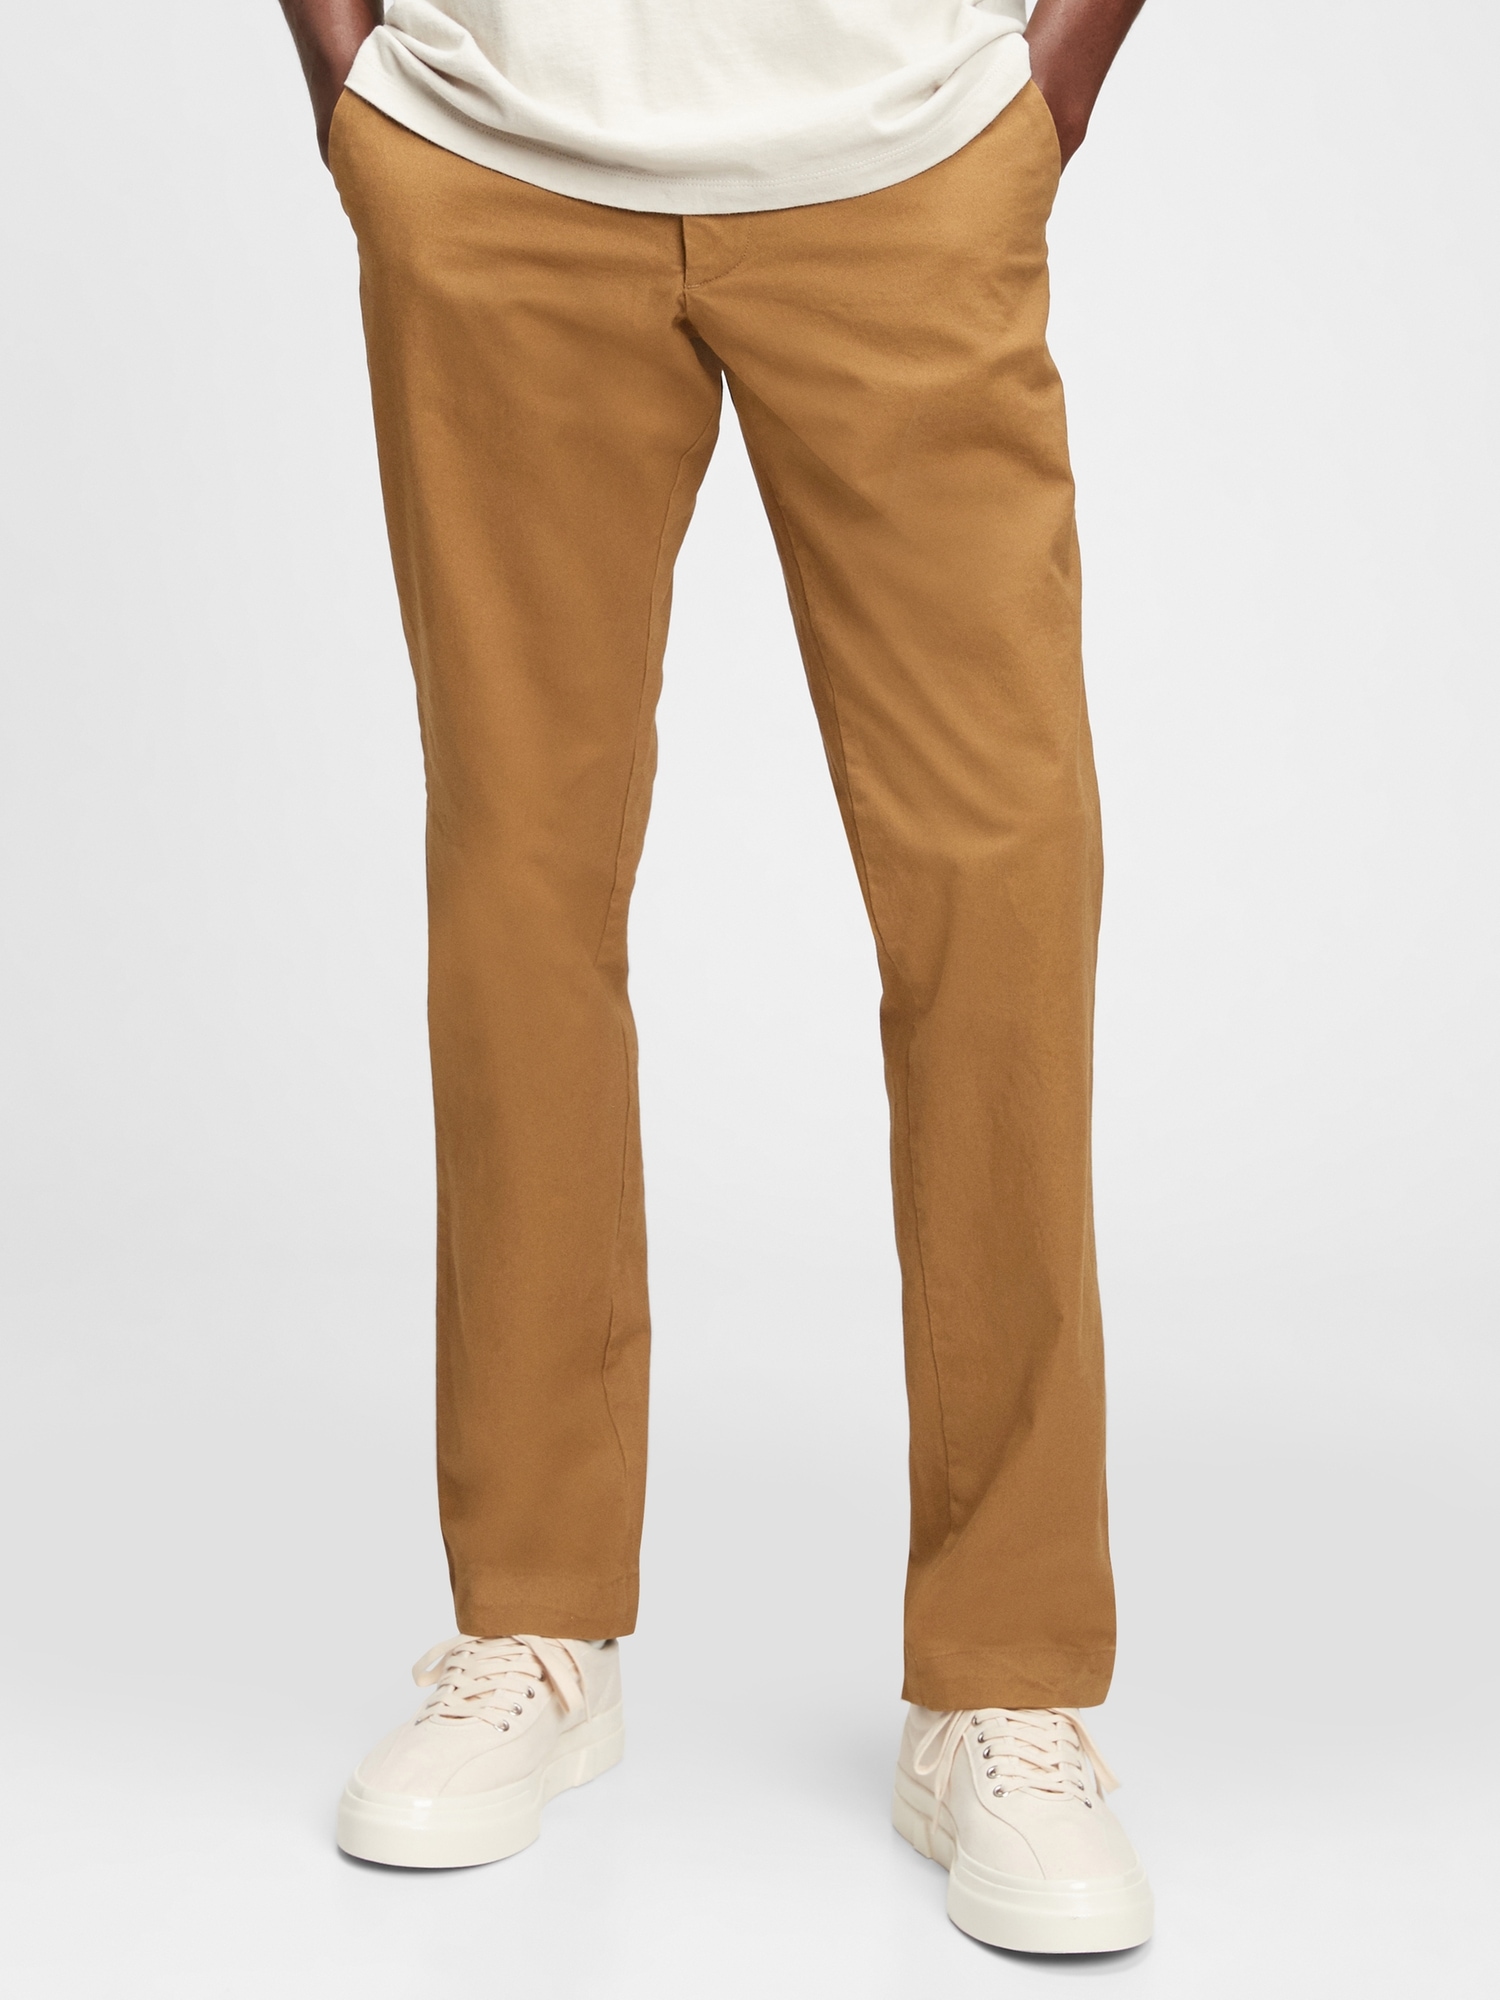 Modern Khakis in Slim Fit with GapFlex | Gap